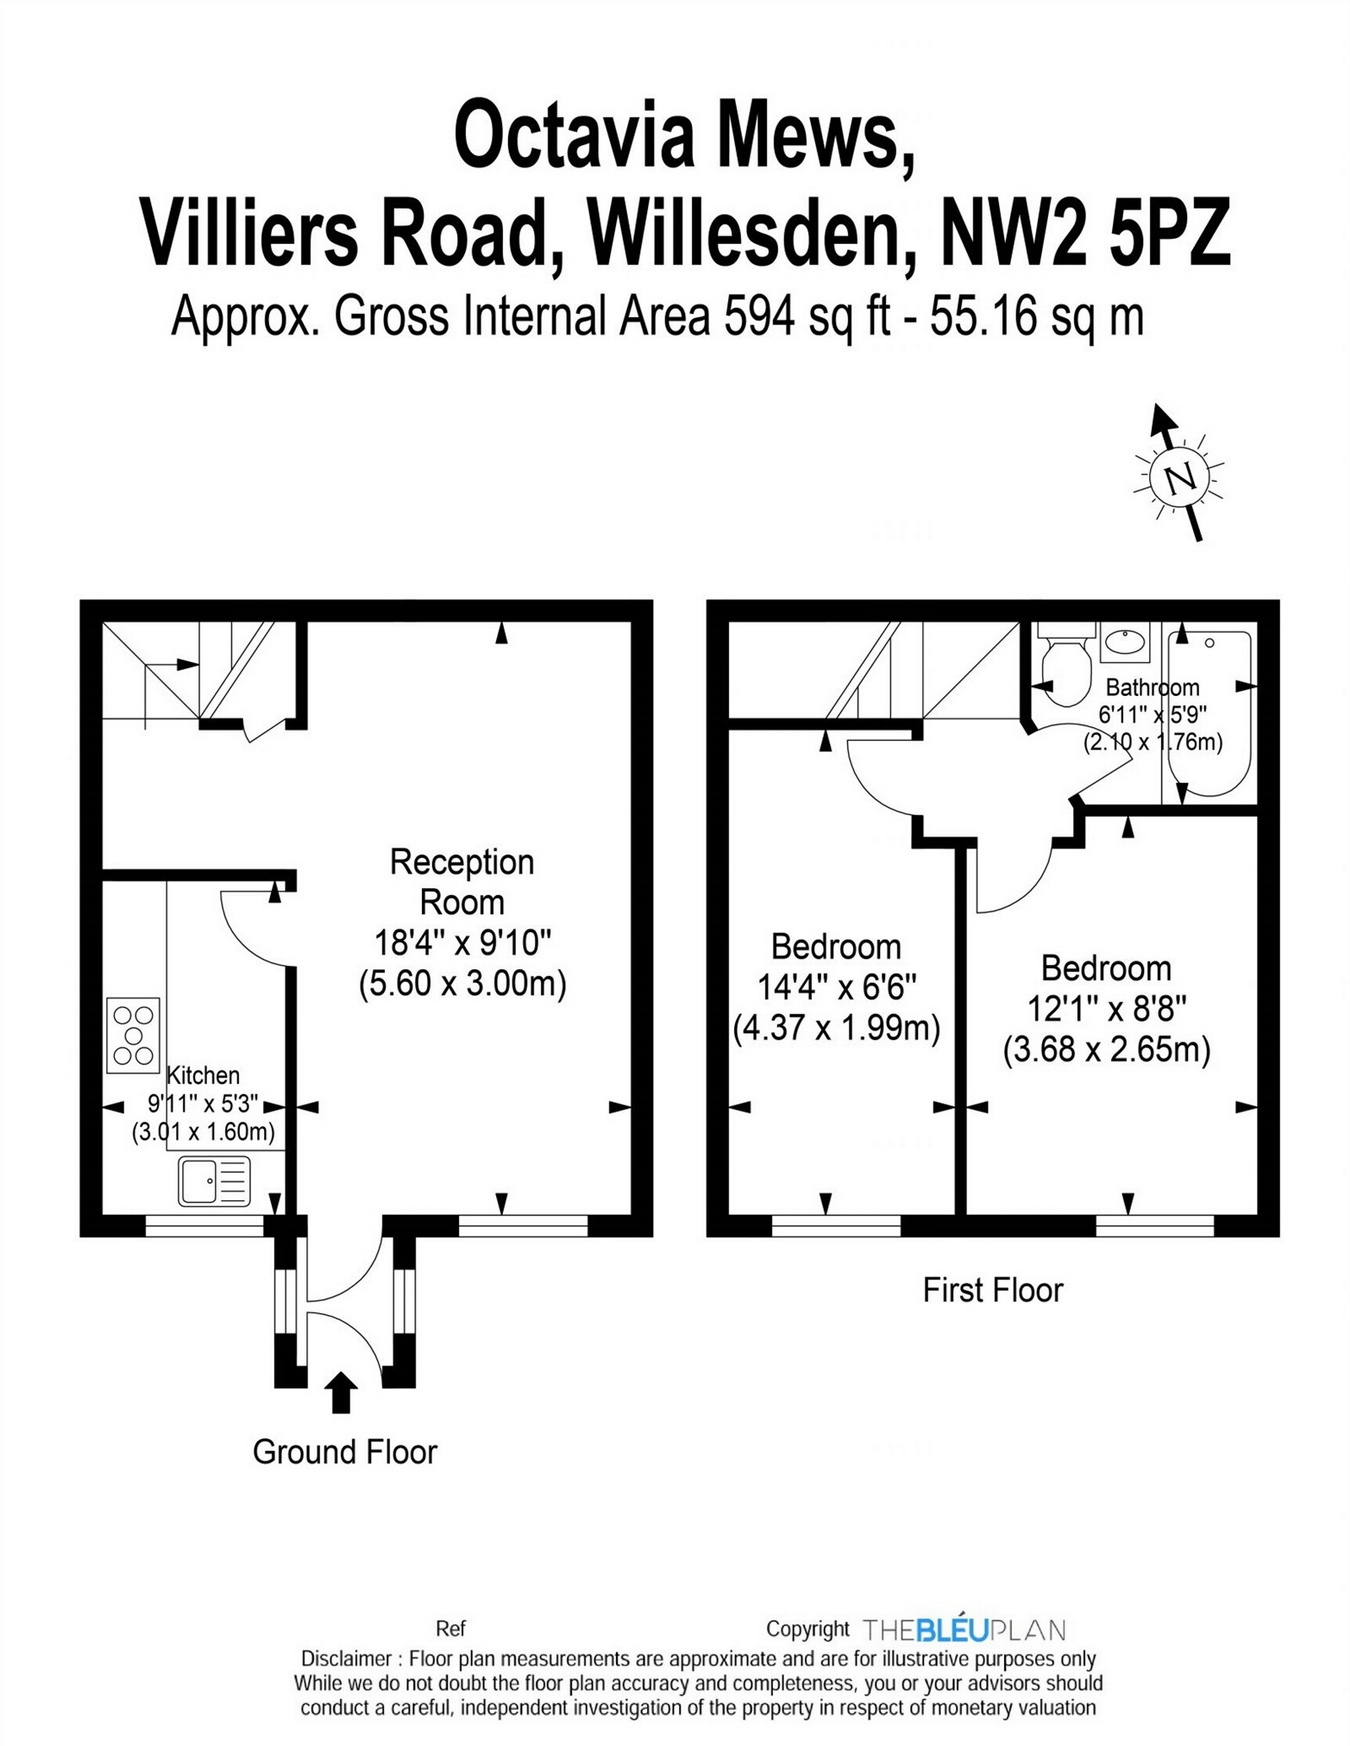 2 Bedrooms Detached house to rent in Octavia Mews, Villiers Road, Willesden NW2